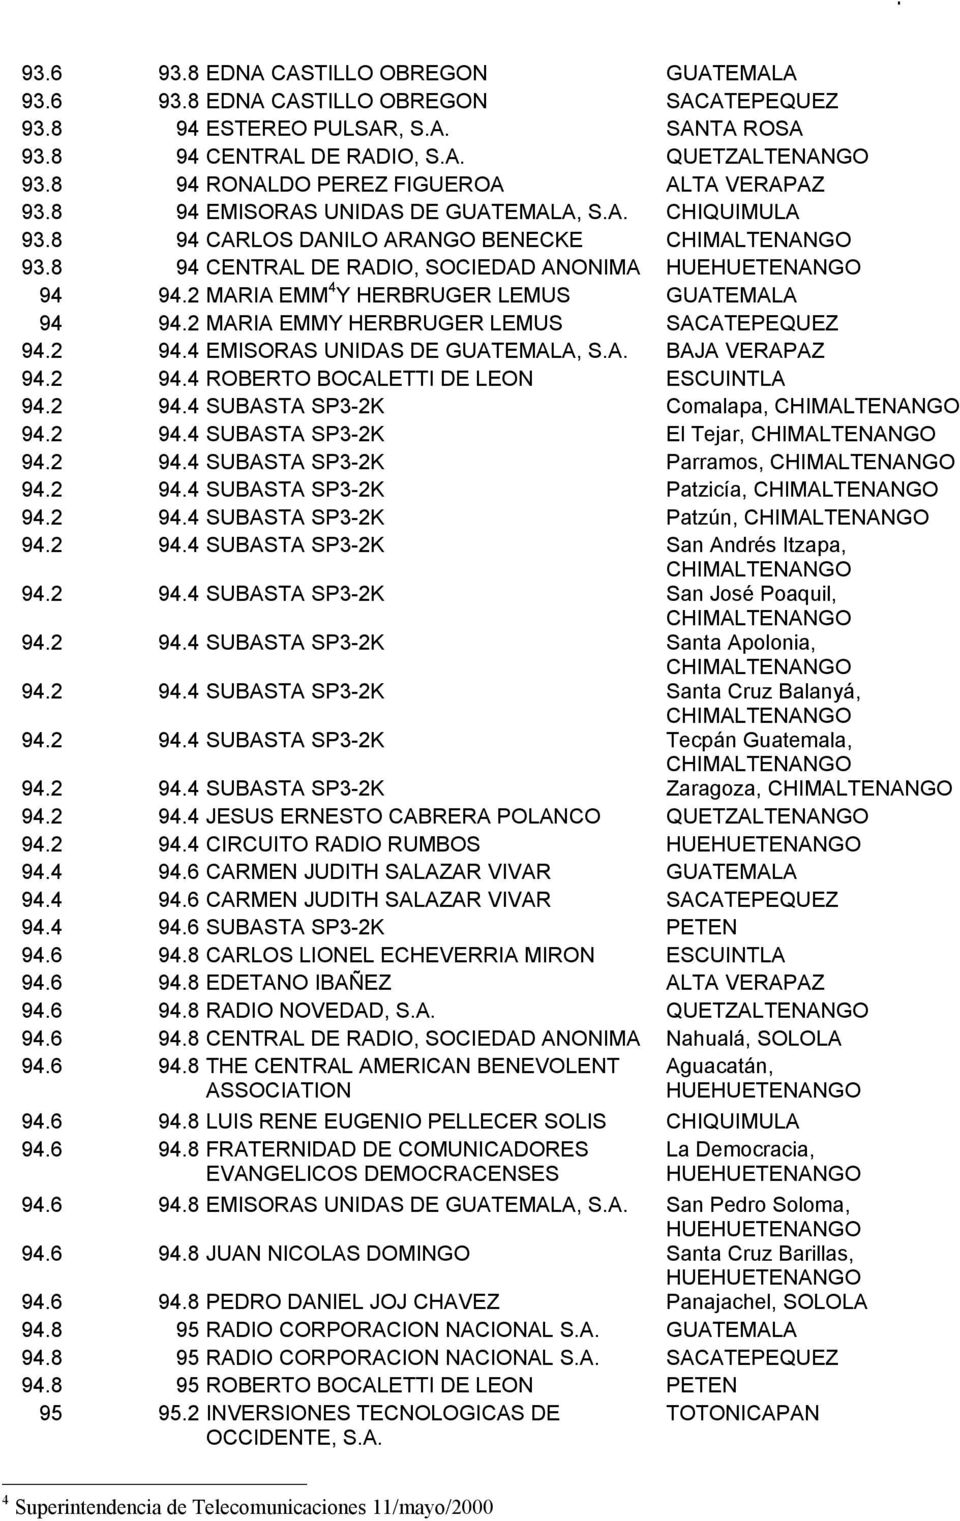 2 MARIA EMMY HERBRUGER LEMUS SACATEPEQUEZ 94.2 94.4 EMISORAS UNIDAS DE GUATEMALA, S.A. BAJA 94.2 94.4 ROBERTO BOCALETTI DE LEON 94.2 94.4 SUBASTA SP3-2K Comalapa, 94.2 94.4 SUBASTA SP3-2K El Tejar, 94.